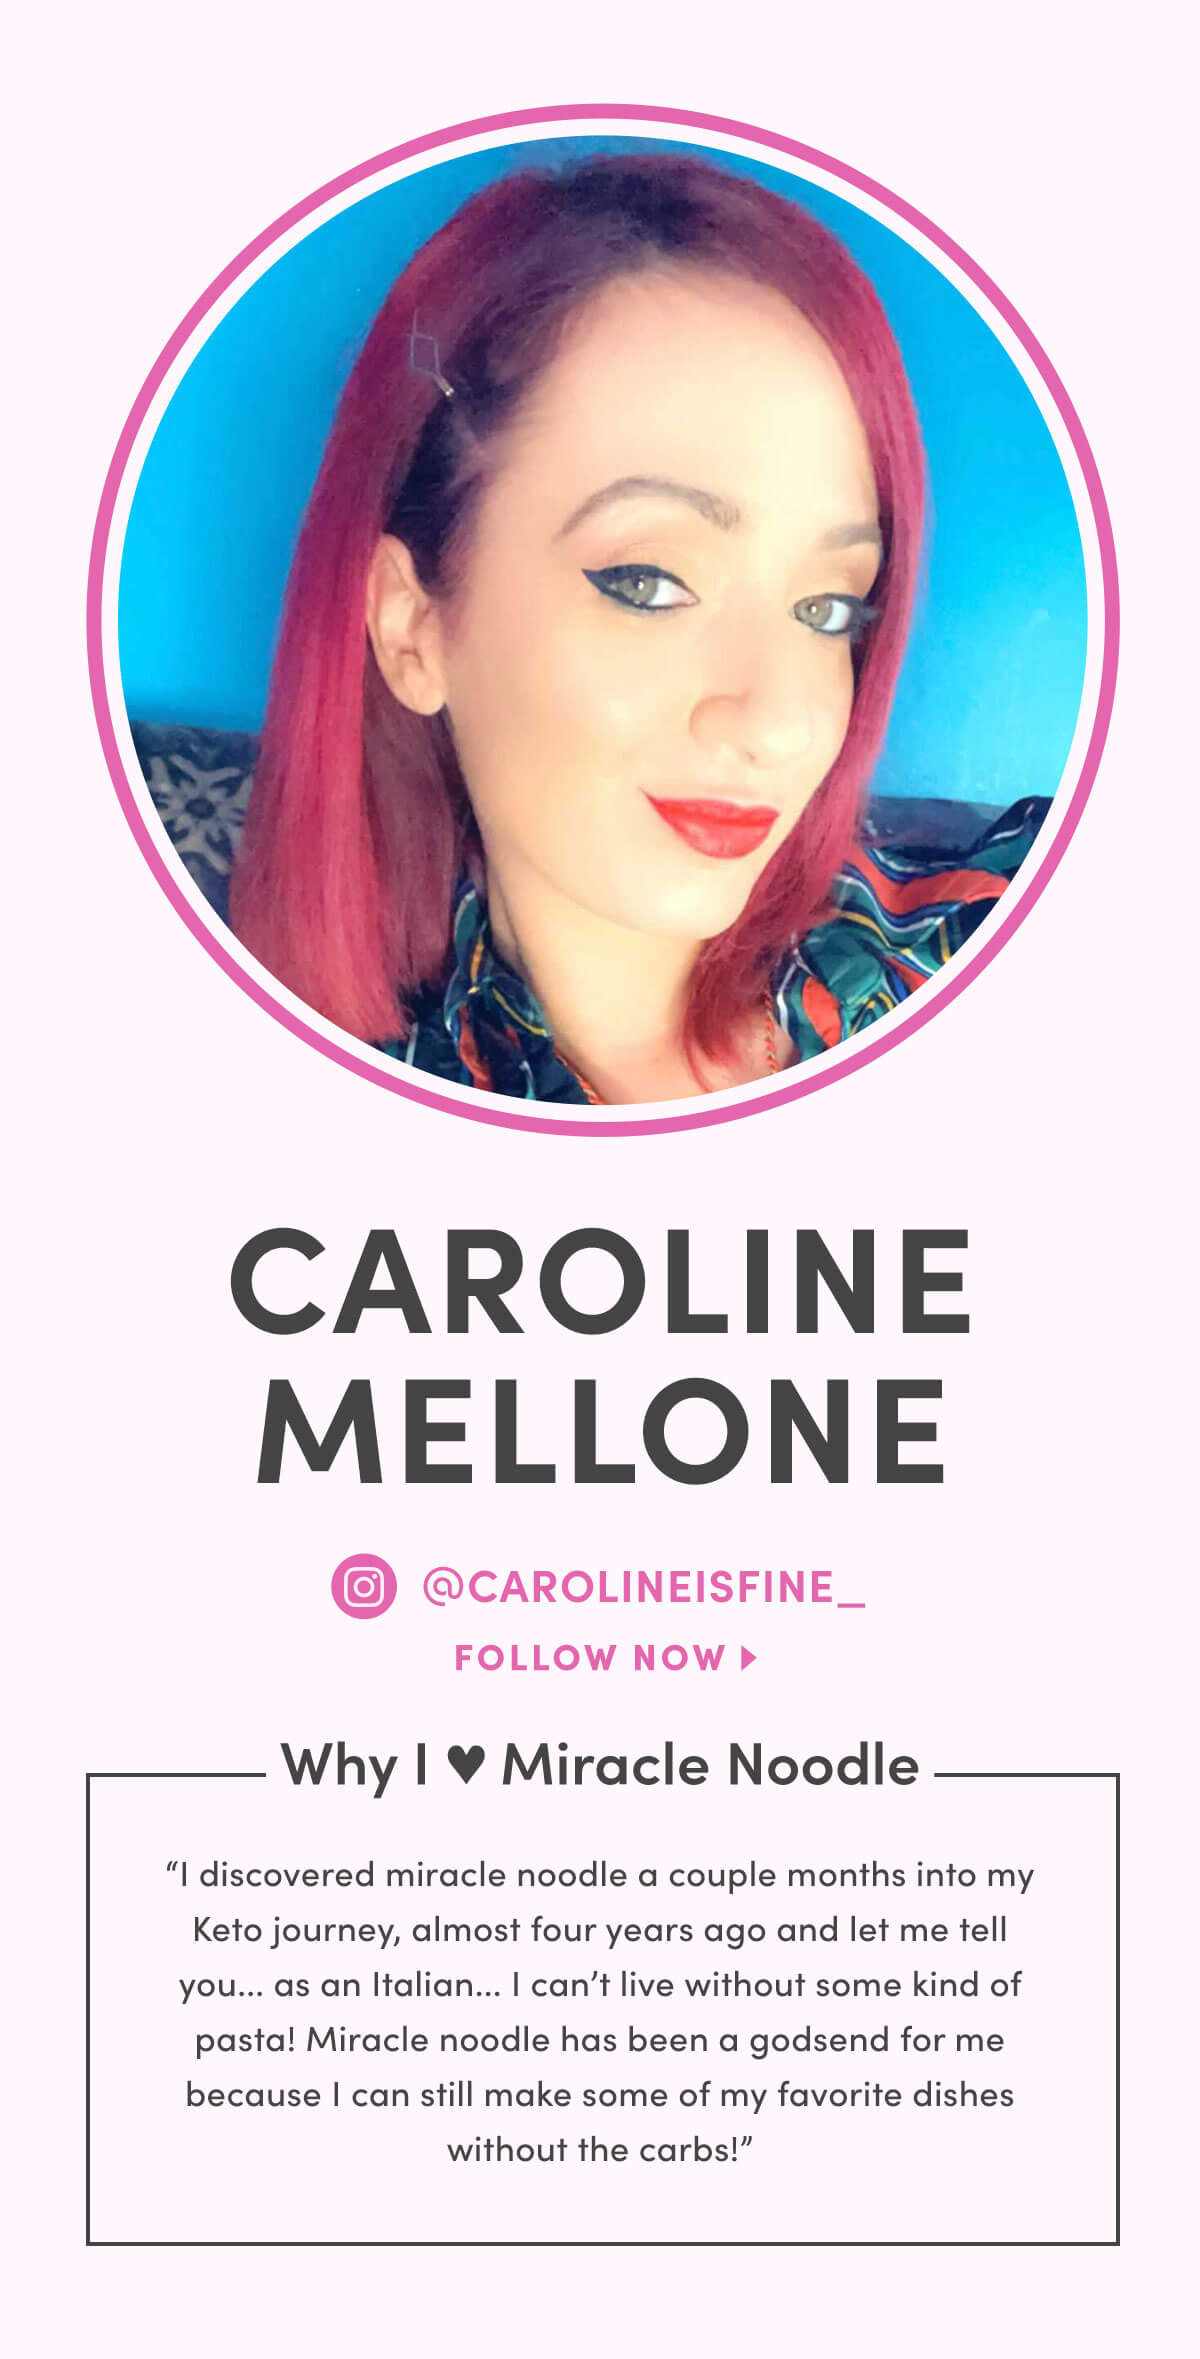 CAROLINE MELLONE - FOLLOW NOW